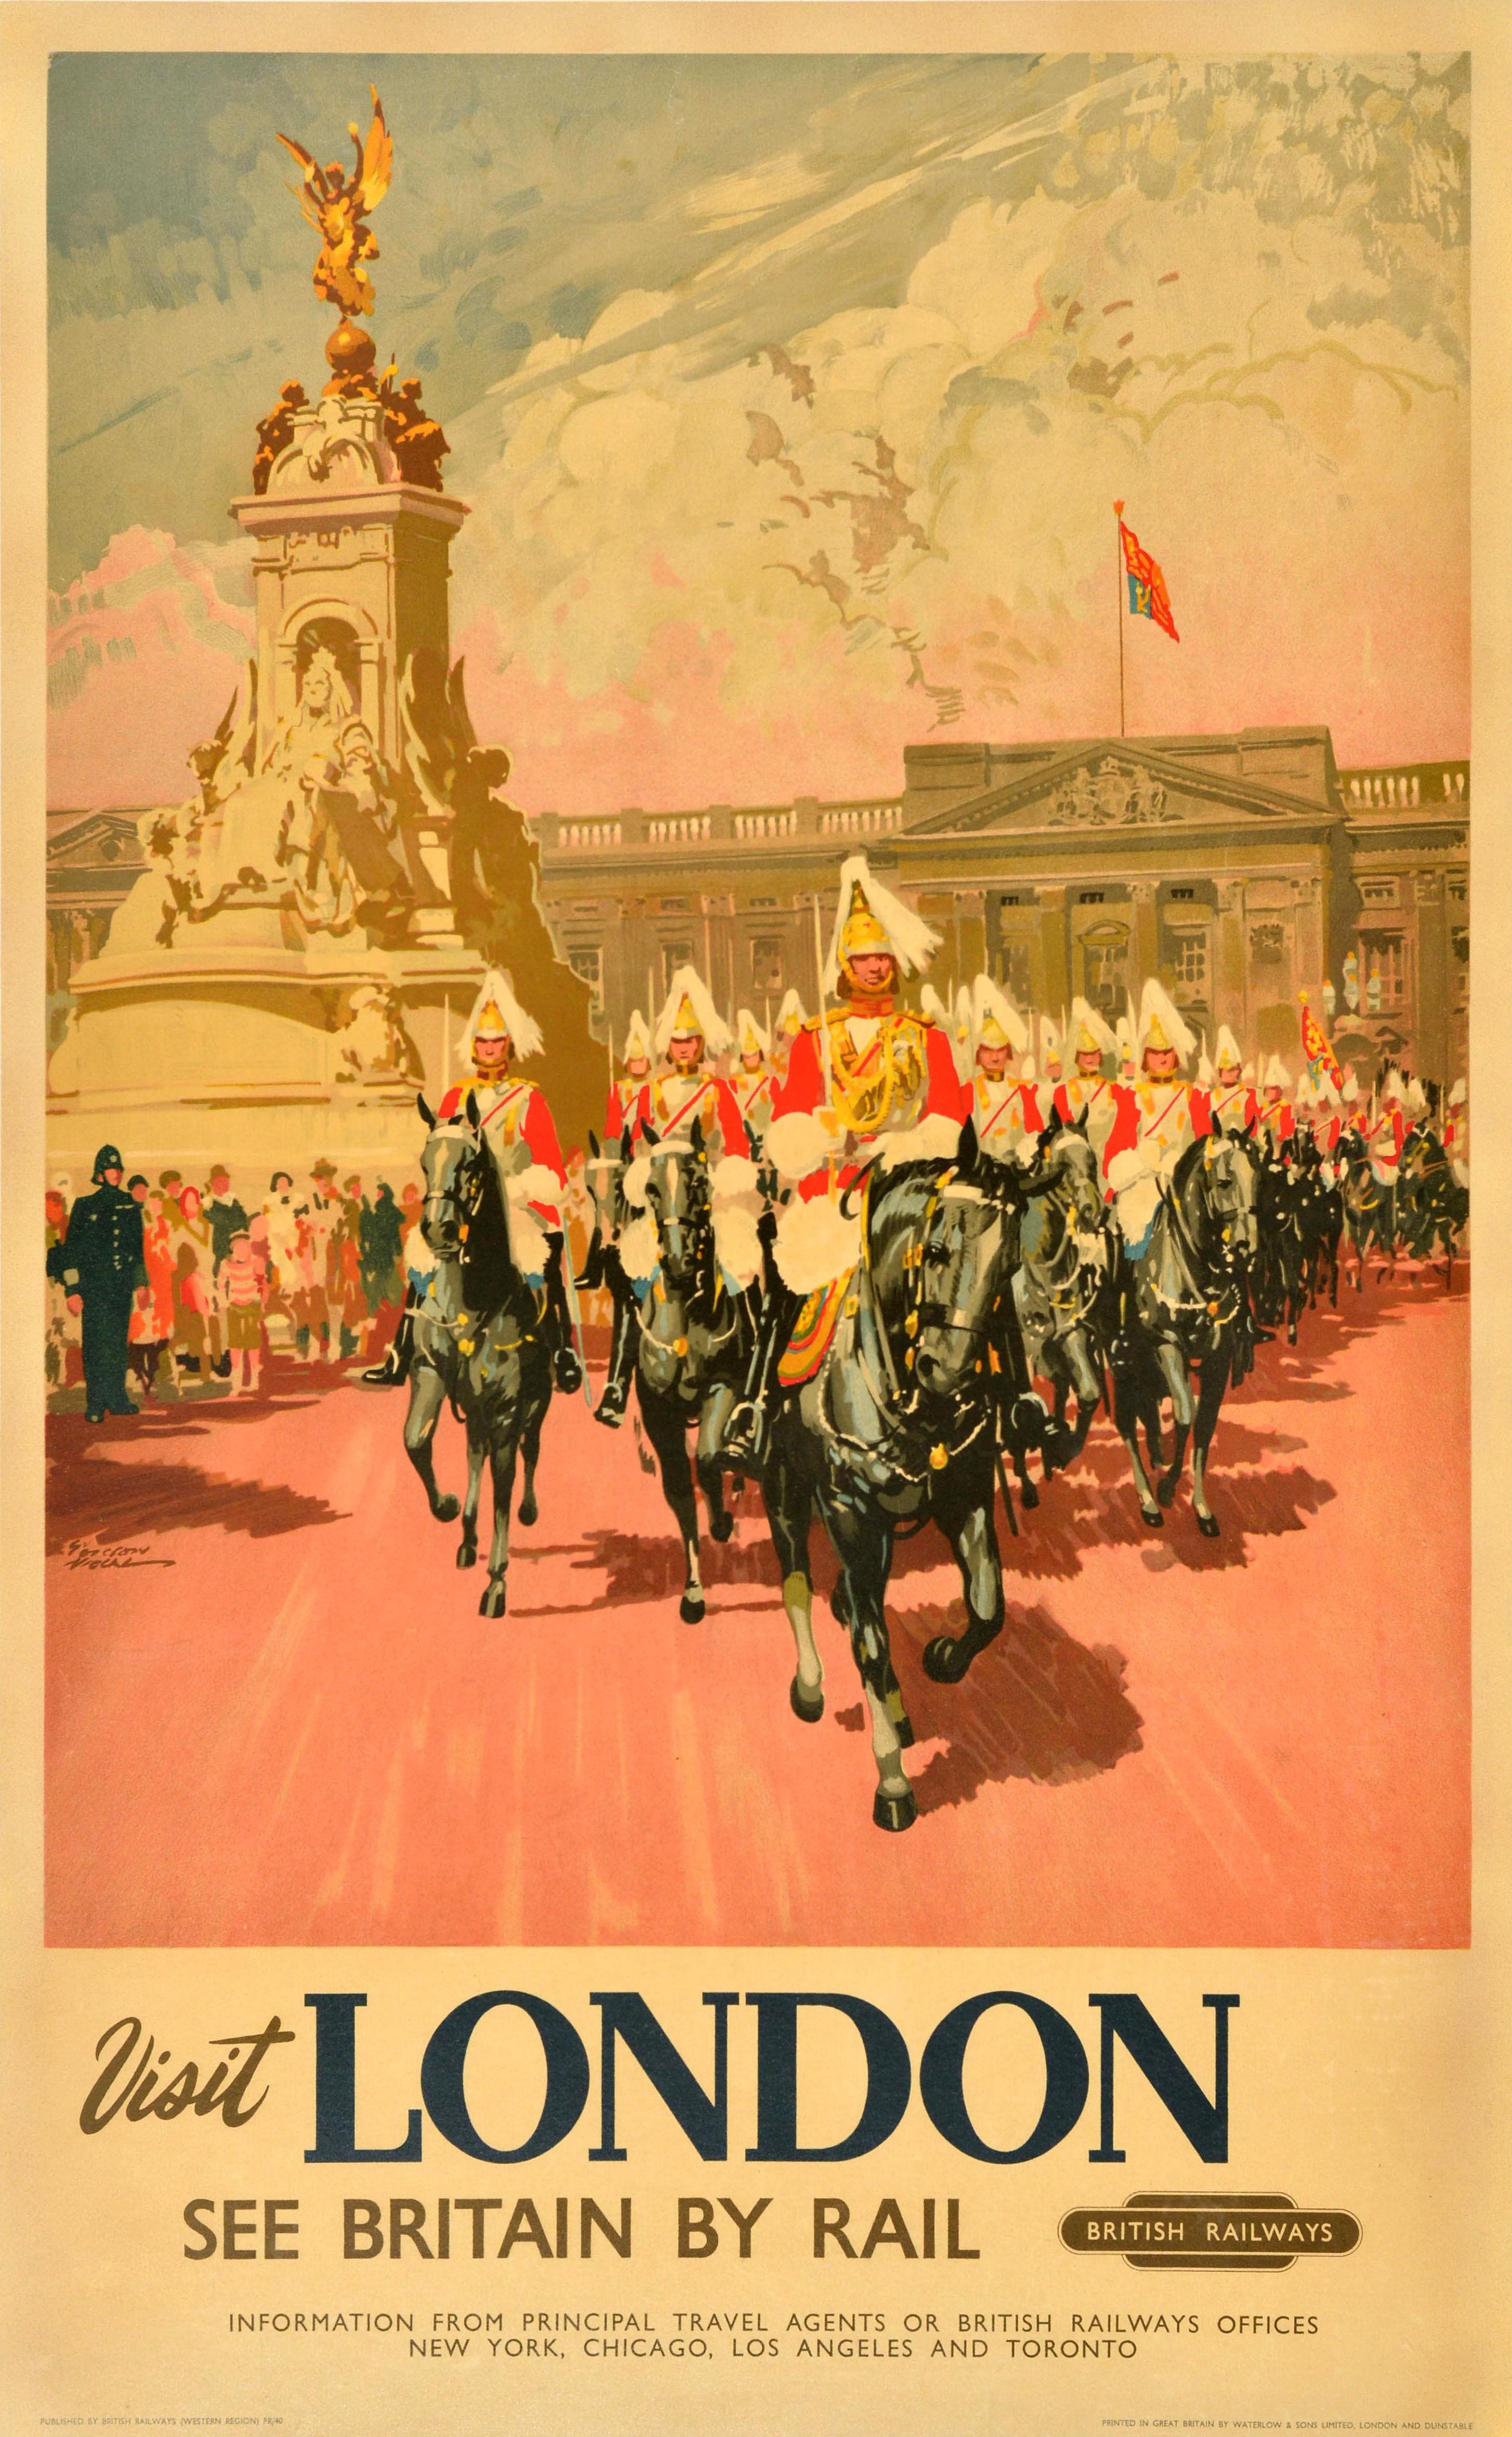 Gordon Nicoll Print - Original Vintage Travel Poster Visit London See Britain By Rail British Railways